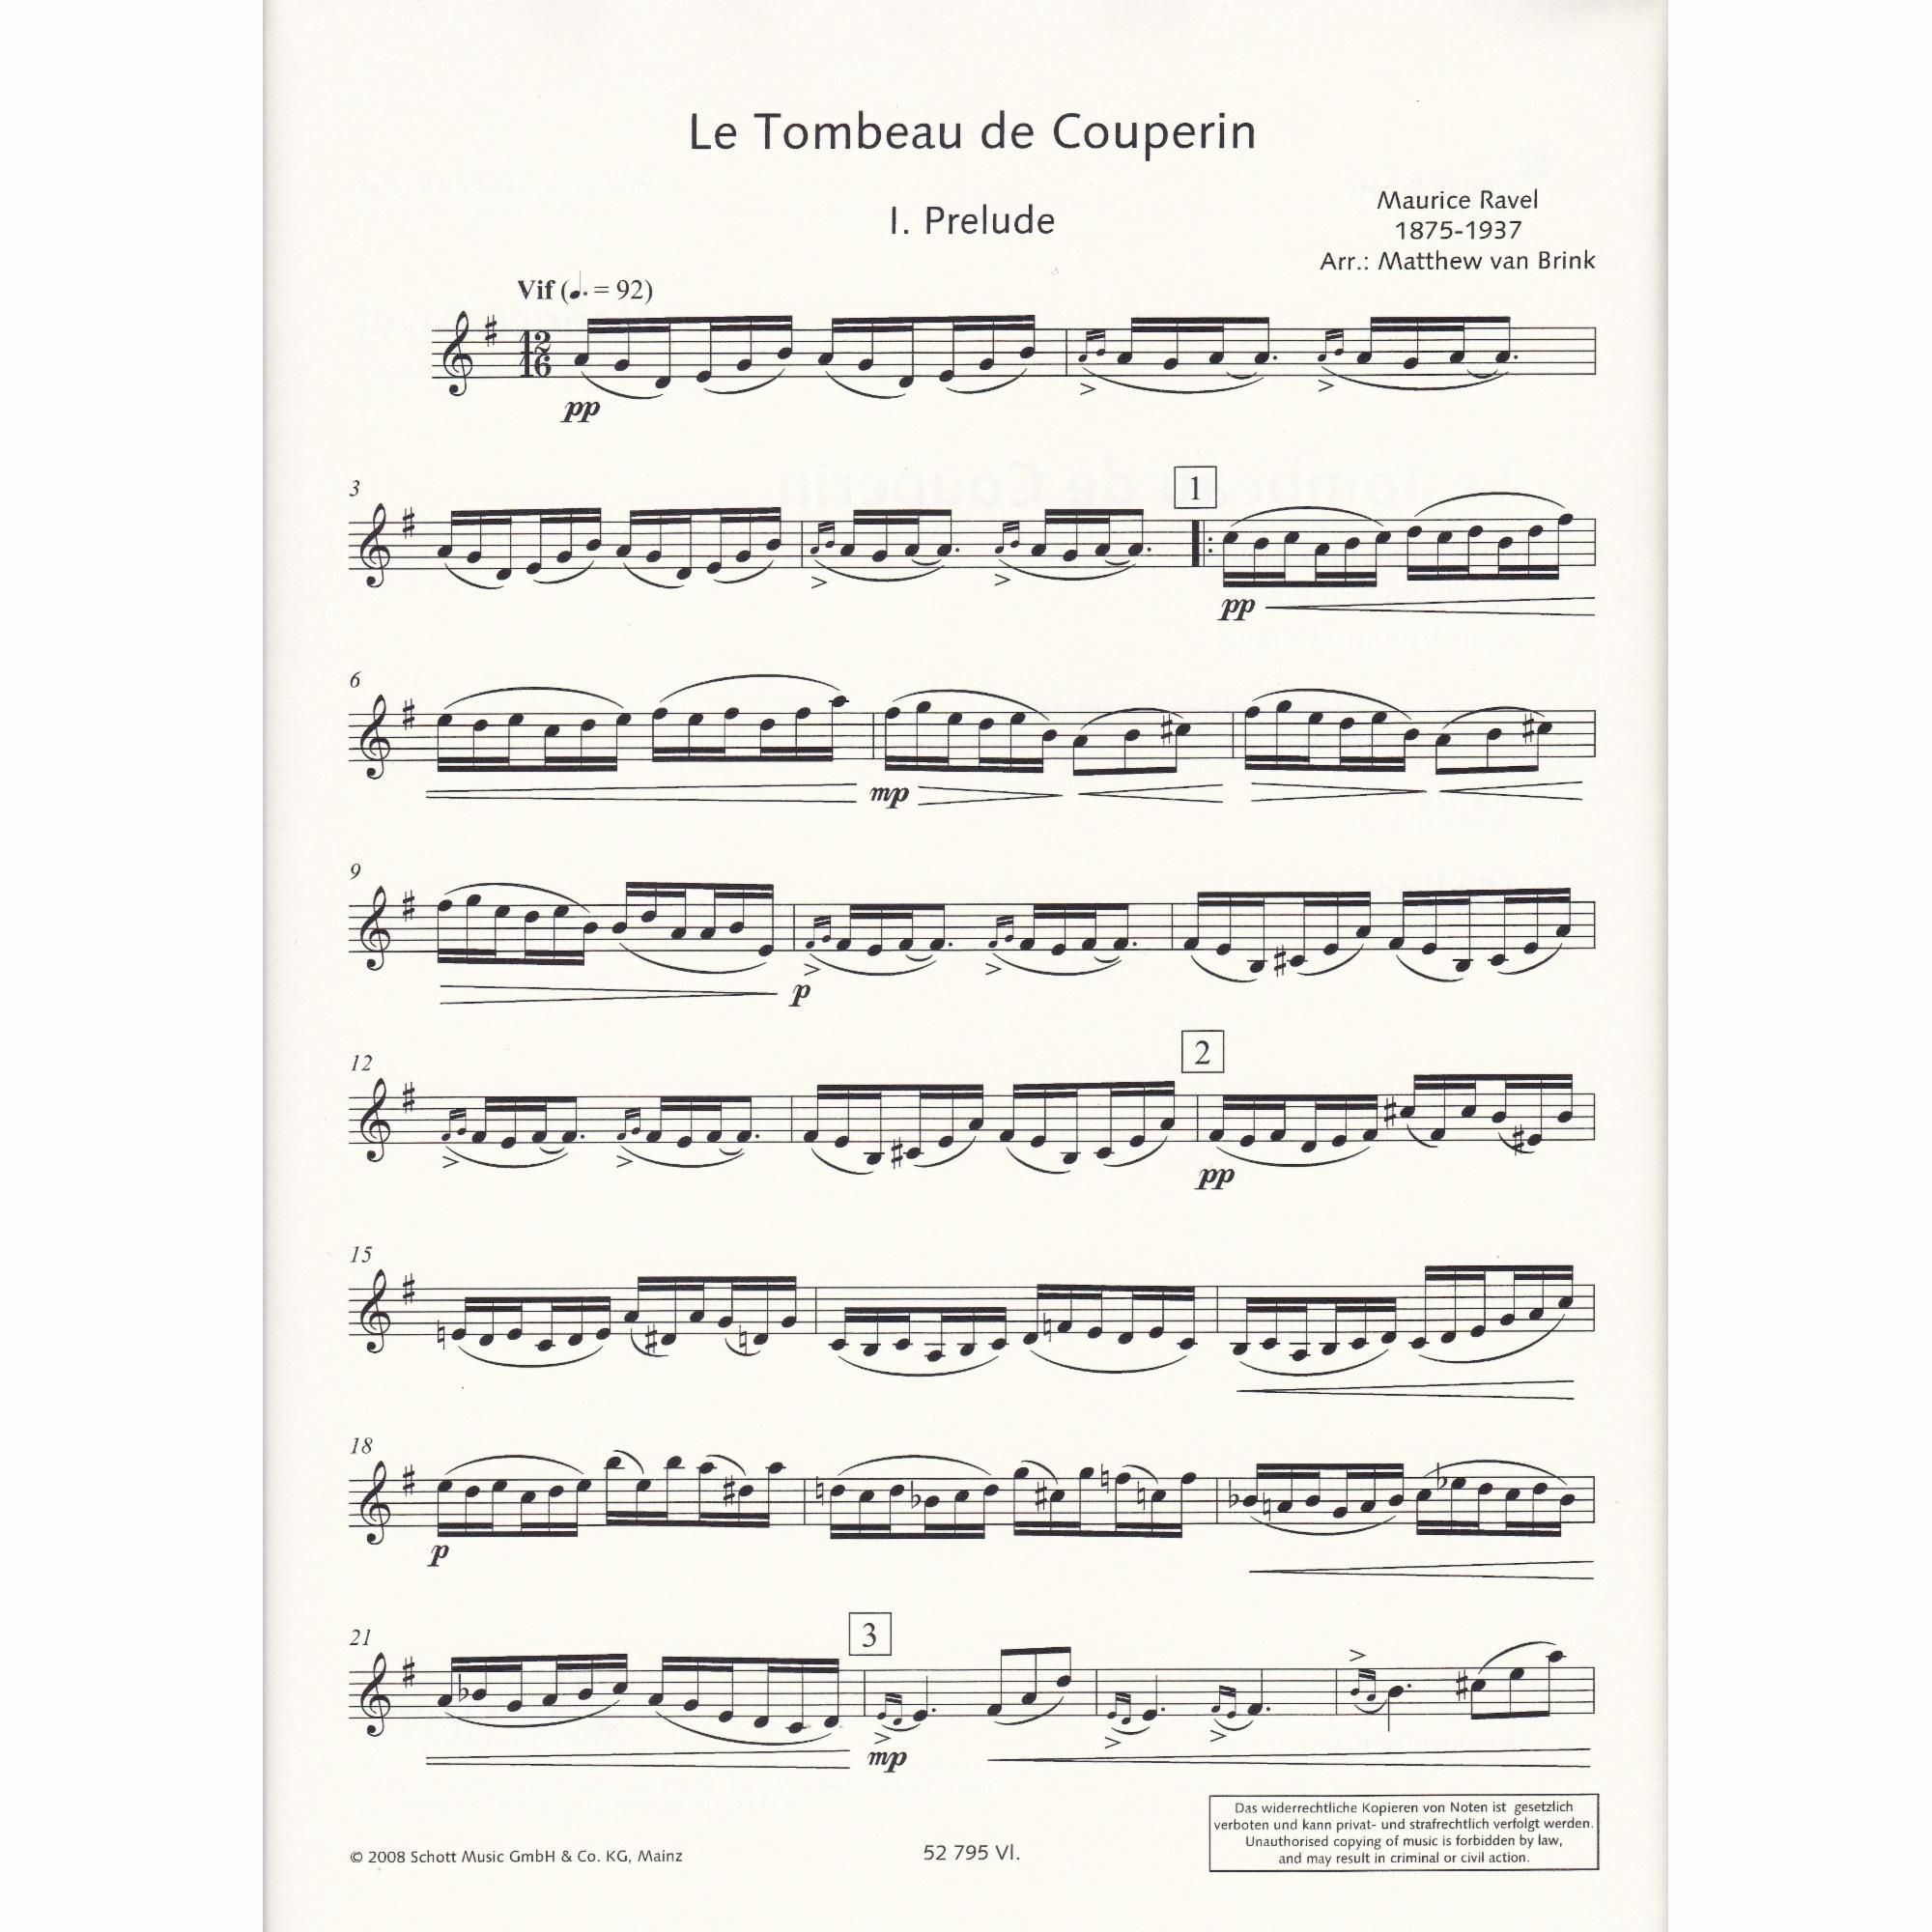 Le Tombeau de Couperin for Violin and Piano